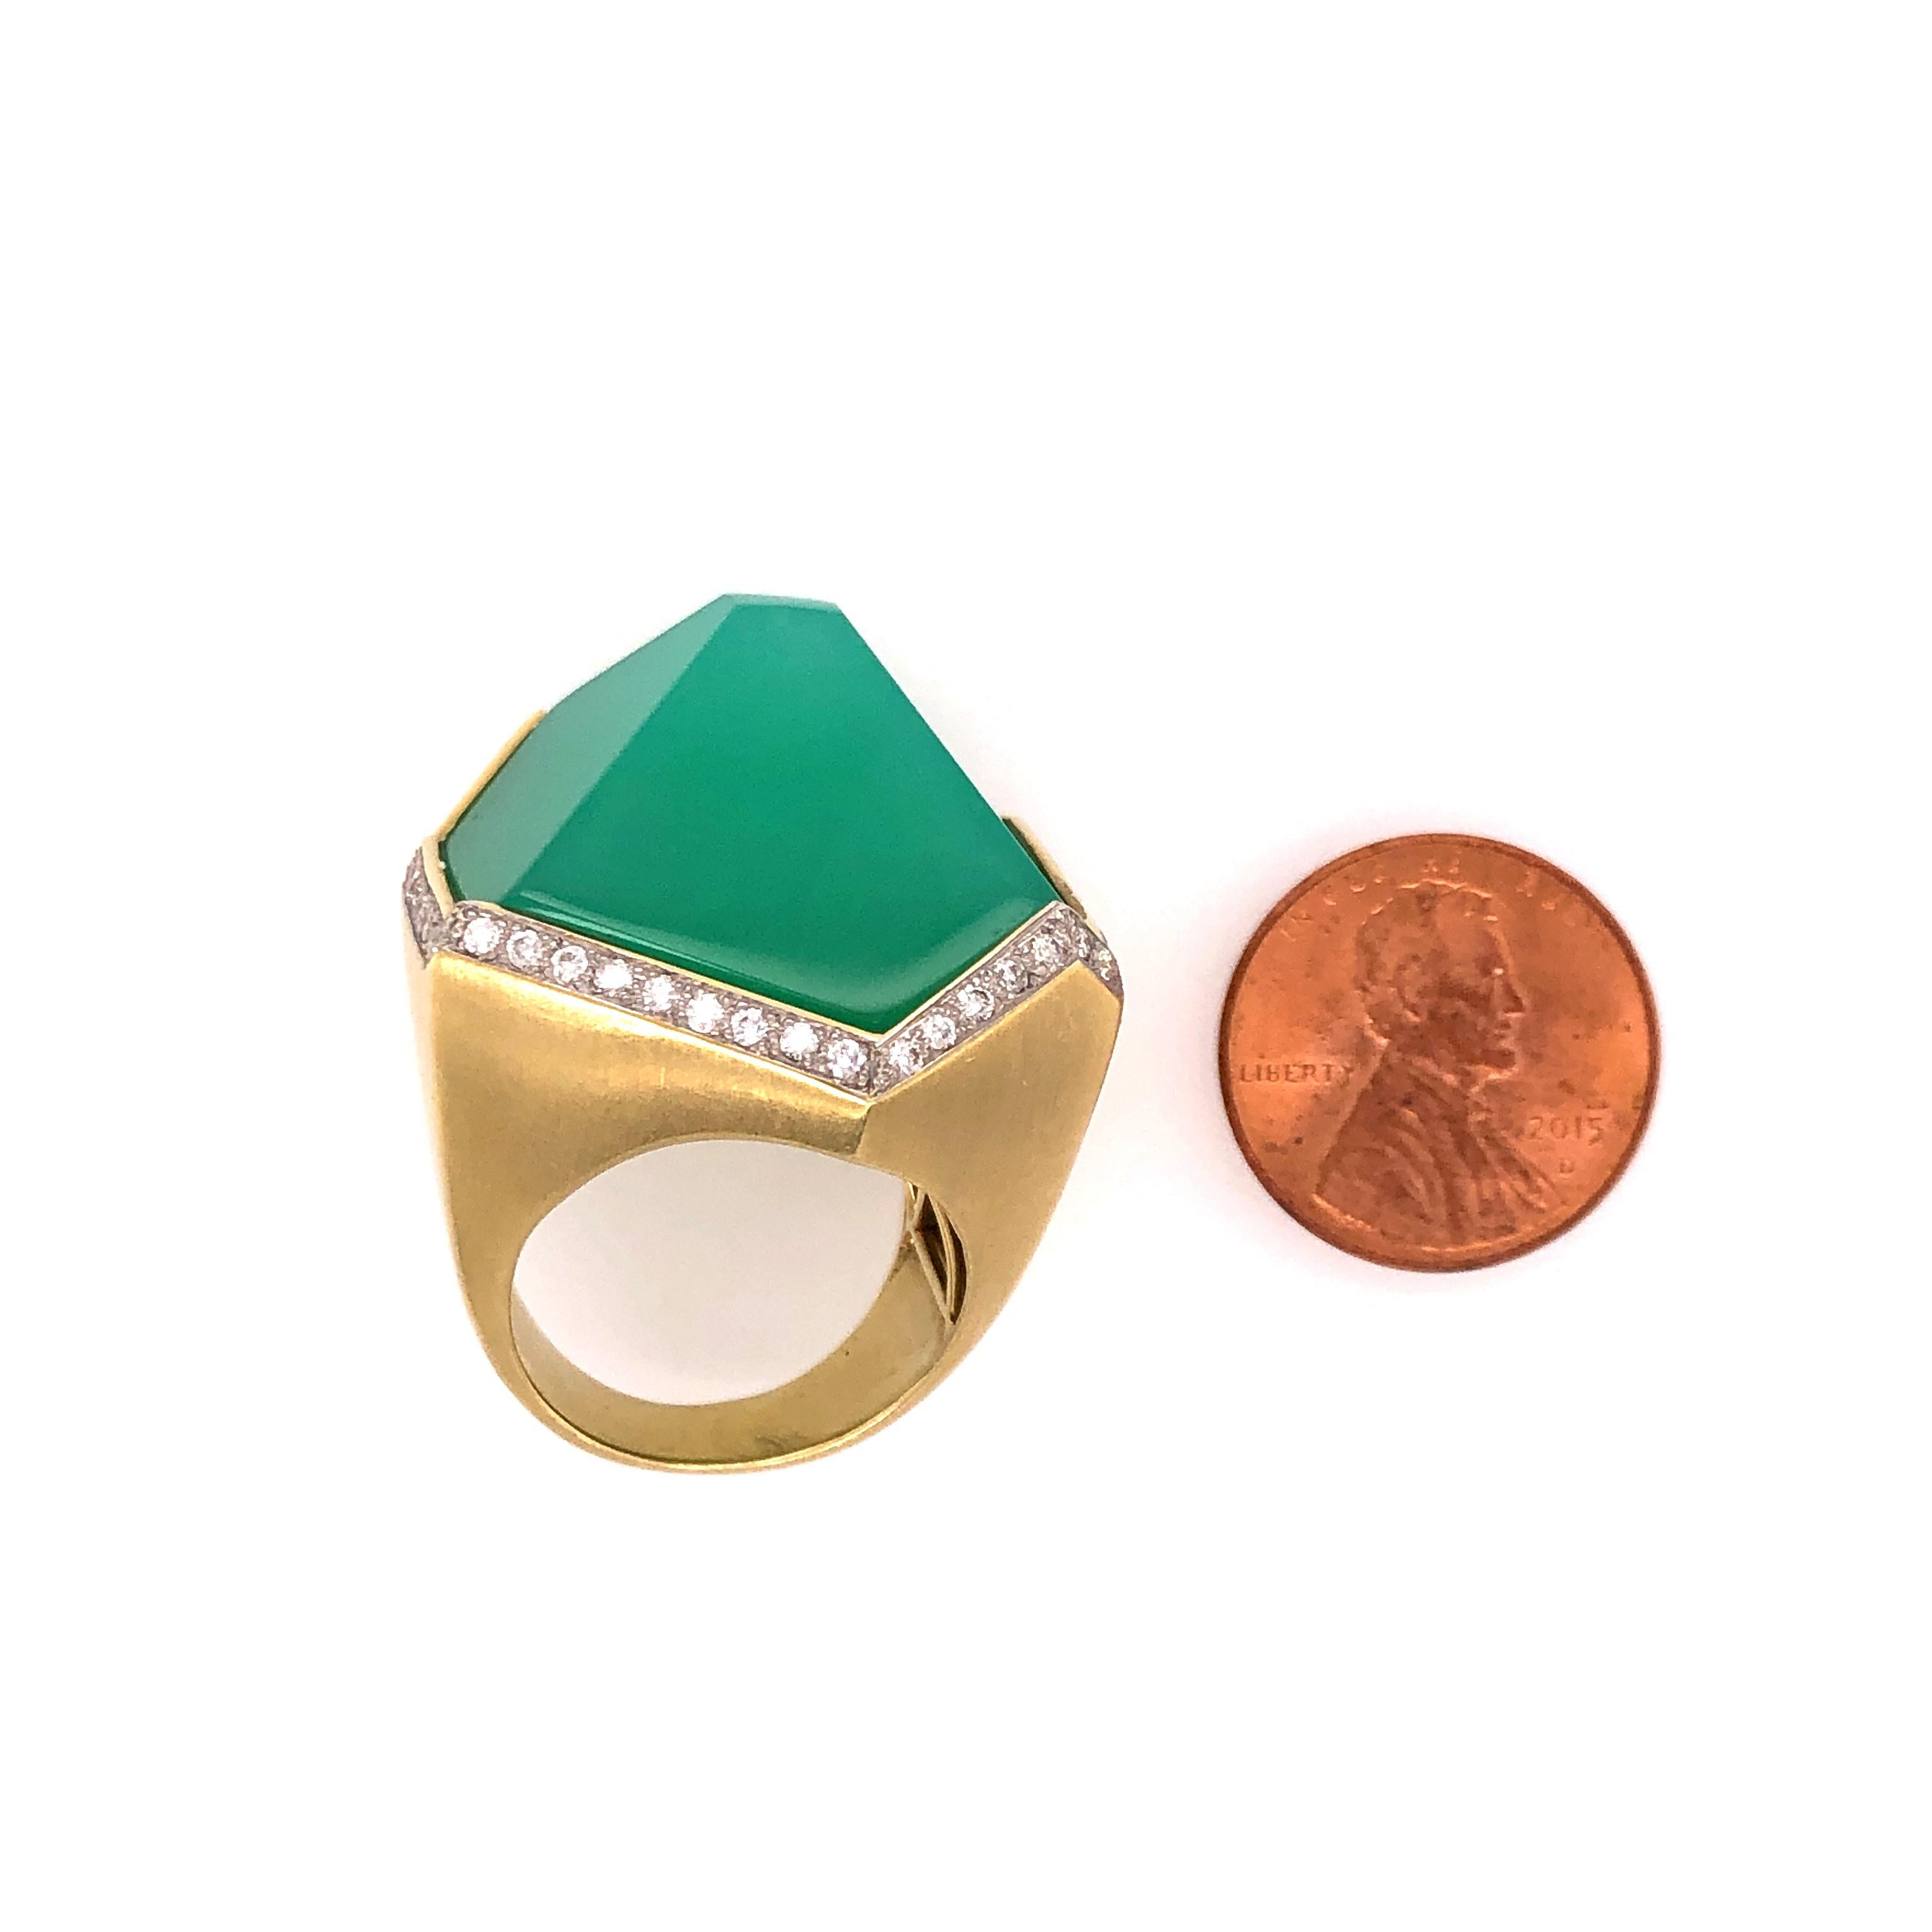 Valerie Naifeh 17.36 Carat Green Chrysoprase Diamond Ring 4